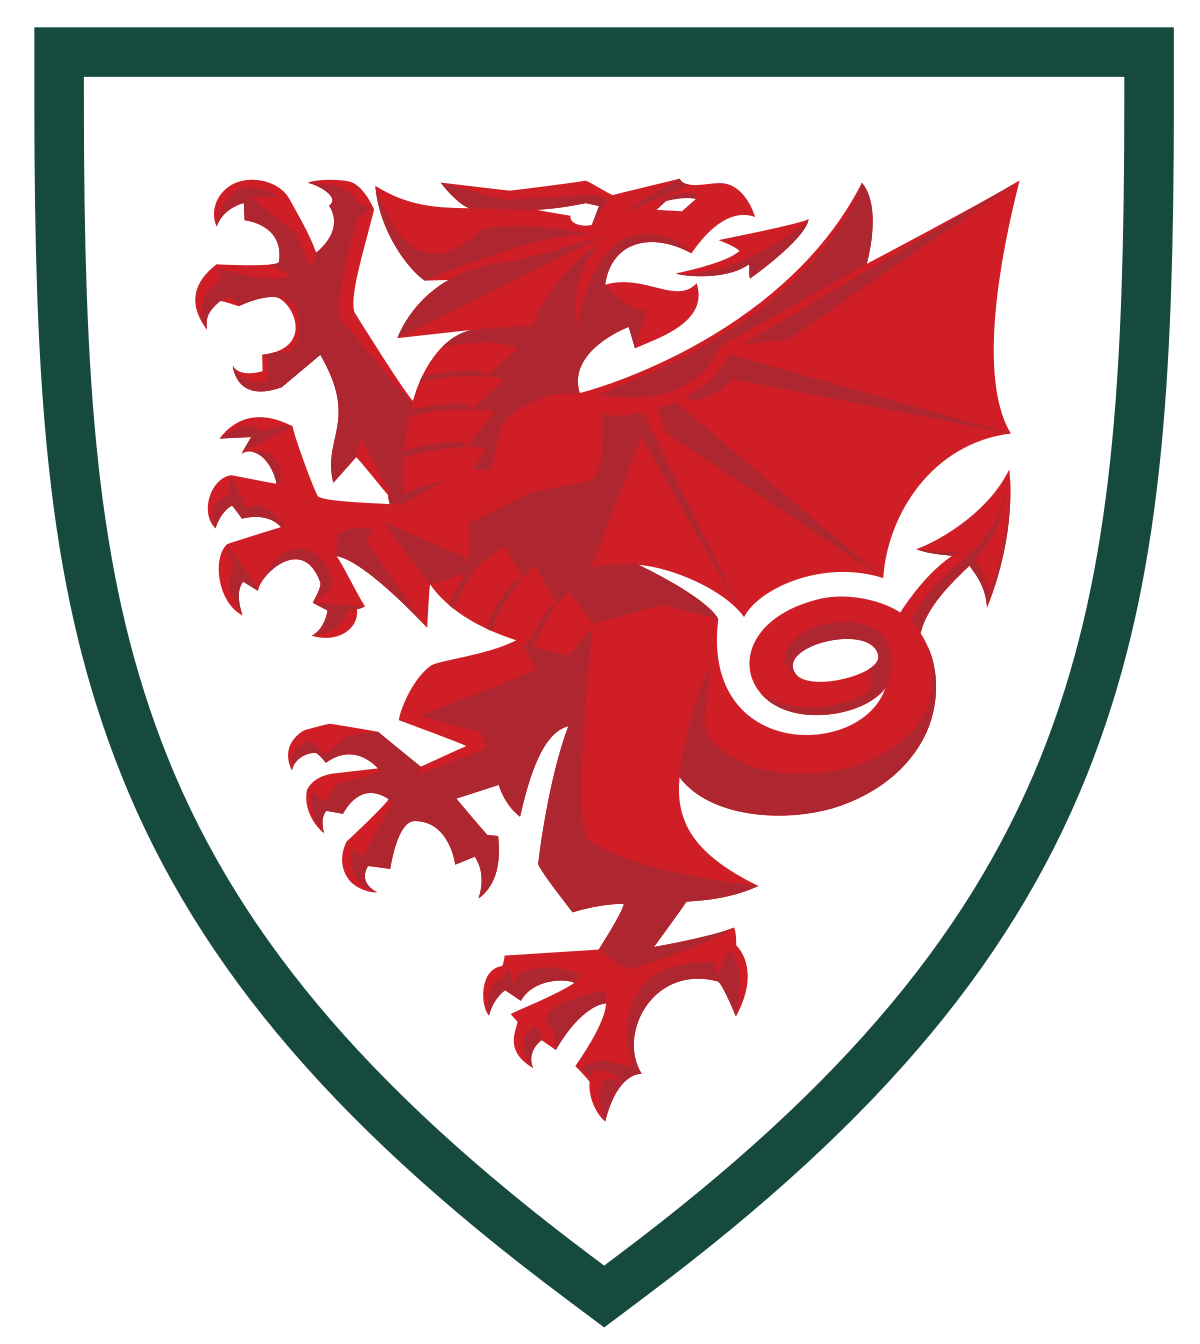 Wales national football team - Wikipedia